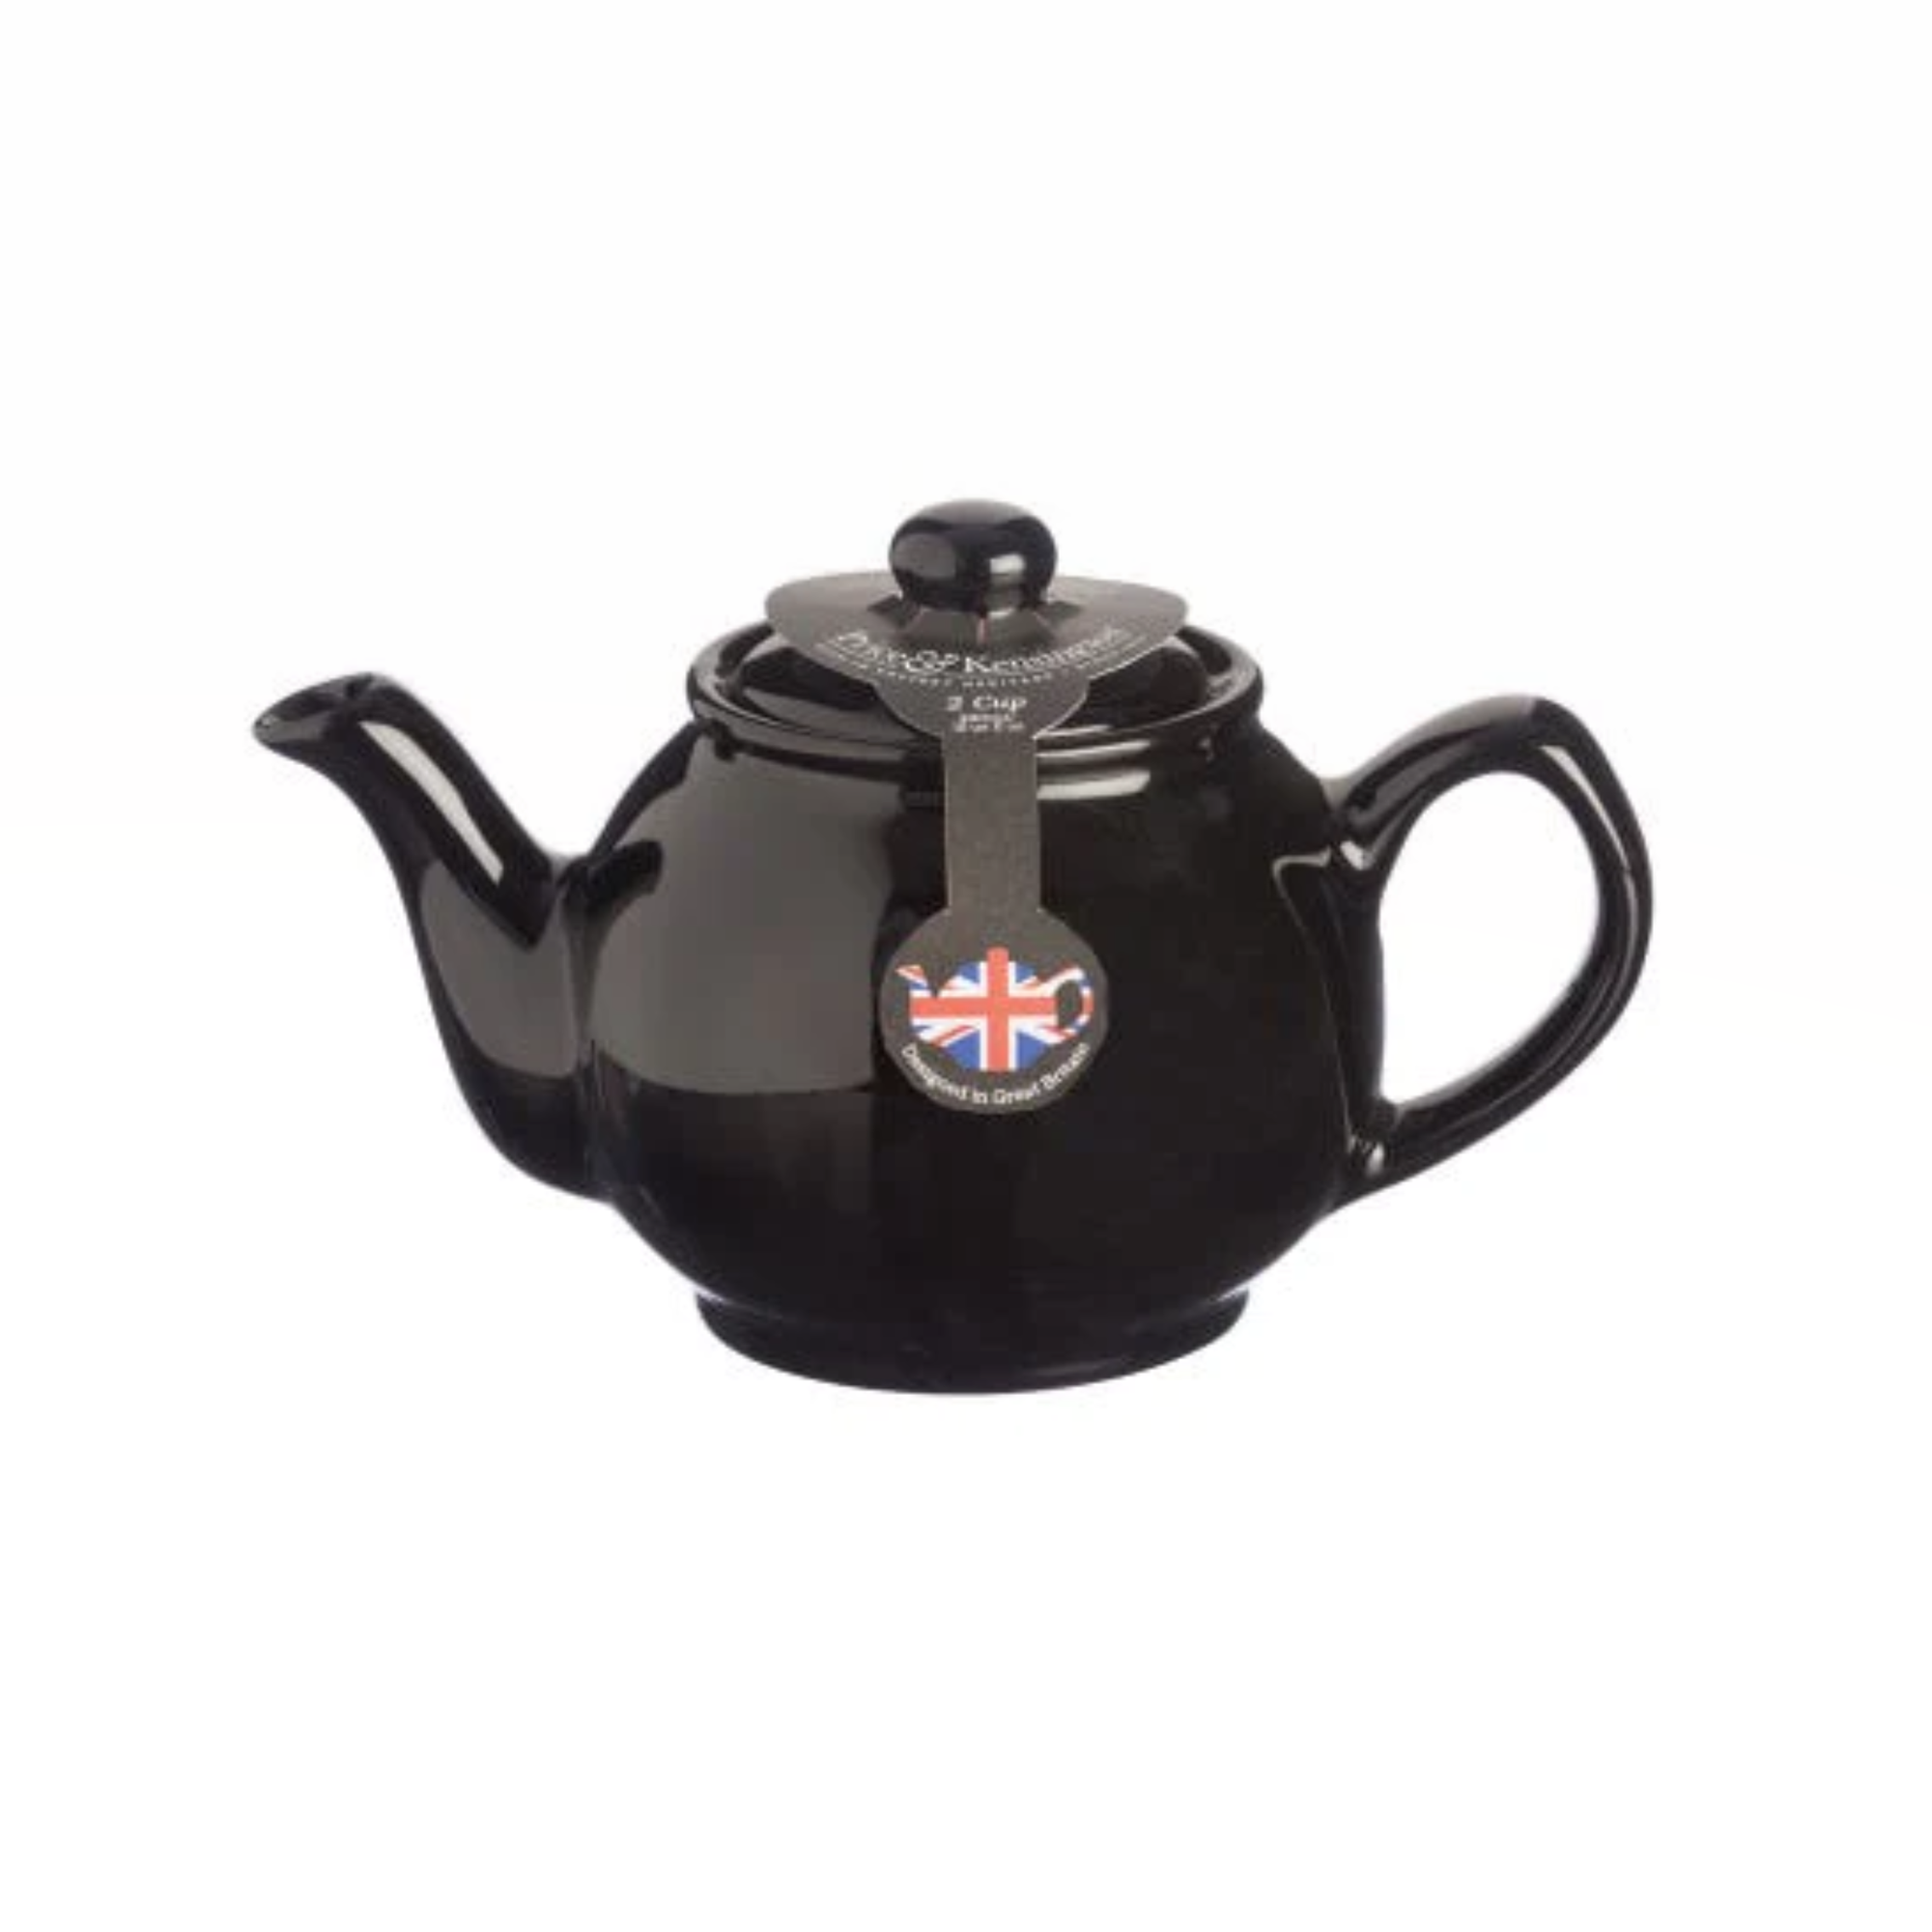 Price & Kensington Rockingham Tea Pot - 2 Cup